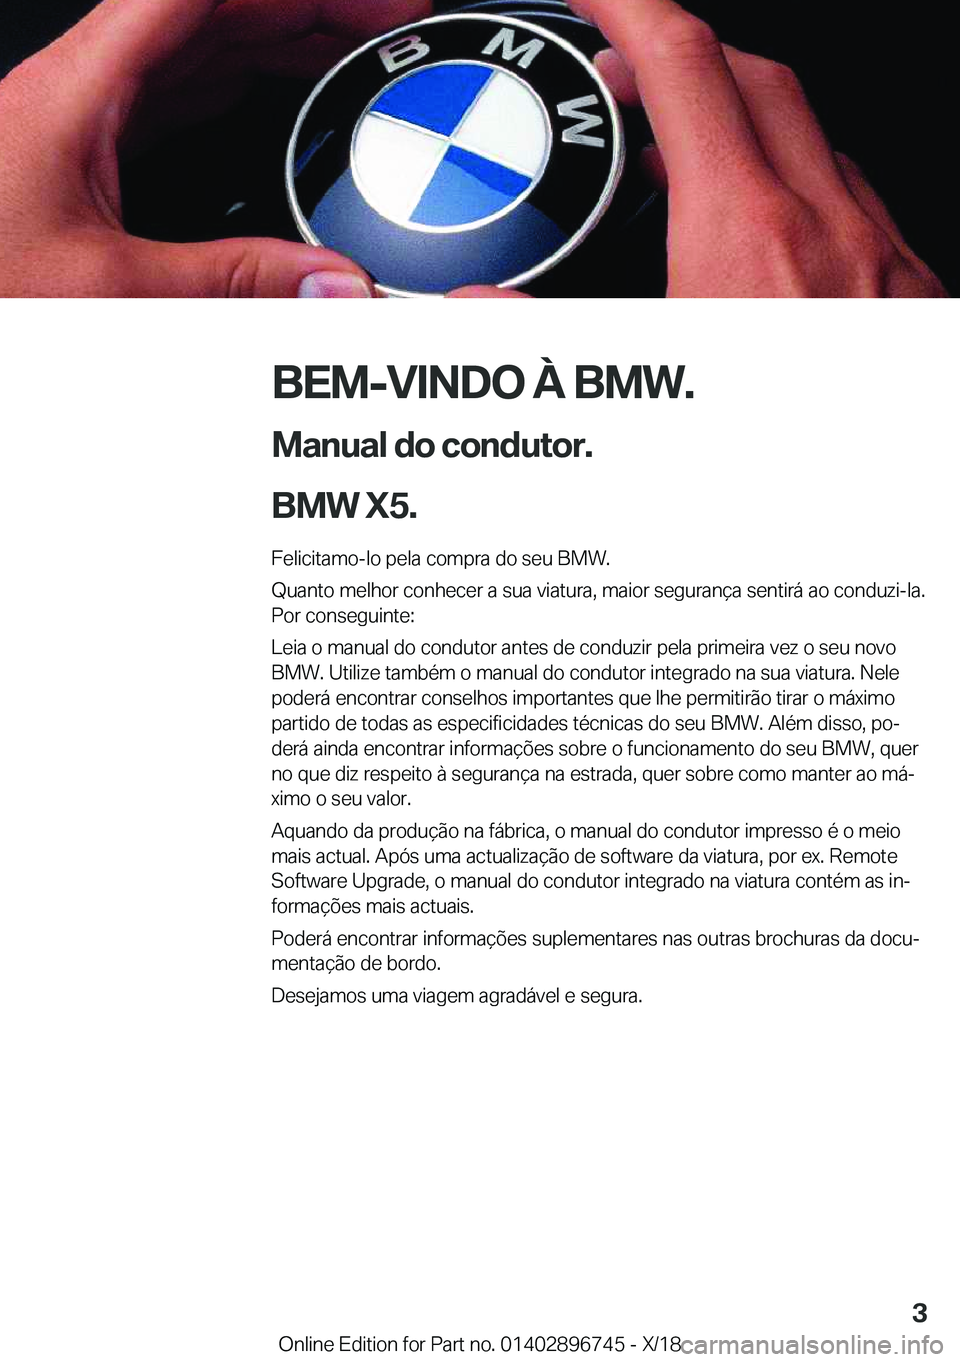 BMW X5 2019  Manual do condutor (in Portuguese) �B�E�M�-�V�I�N�D�O��À��B�M�W�.
�M�a�n�u�a�l��d�o��c�o�n�d�u�t�o�r�.
�B�M�W��X�5�. �F�e�l�i�c�i�t�a�m�o�-�l�o��p�e�l�a��c�o�m�p�r�a��d�o��s�e�u��B�M�W�.
�Q�u�a�n�t�o��m�e�l�h�o�r��c�o�n�h�